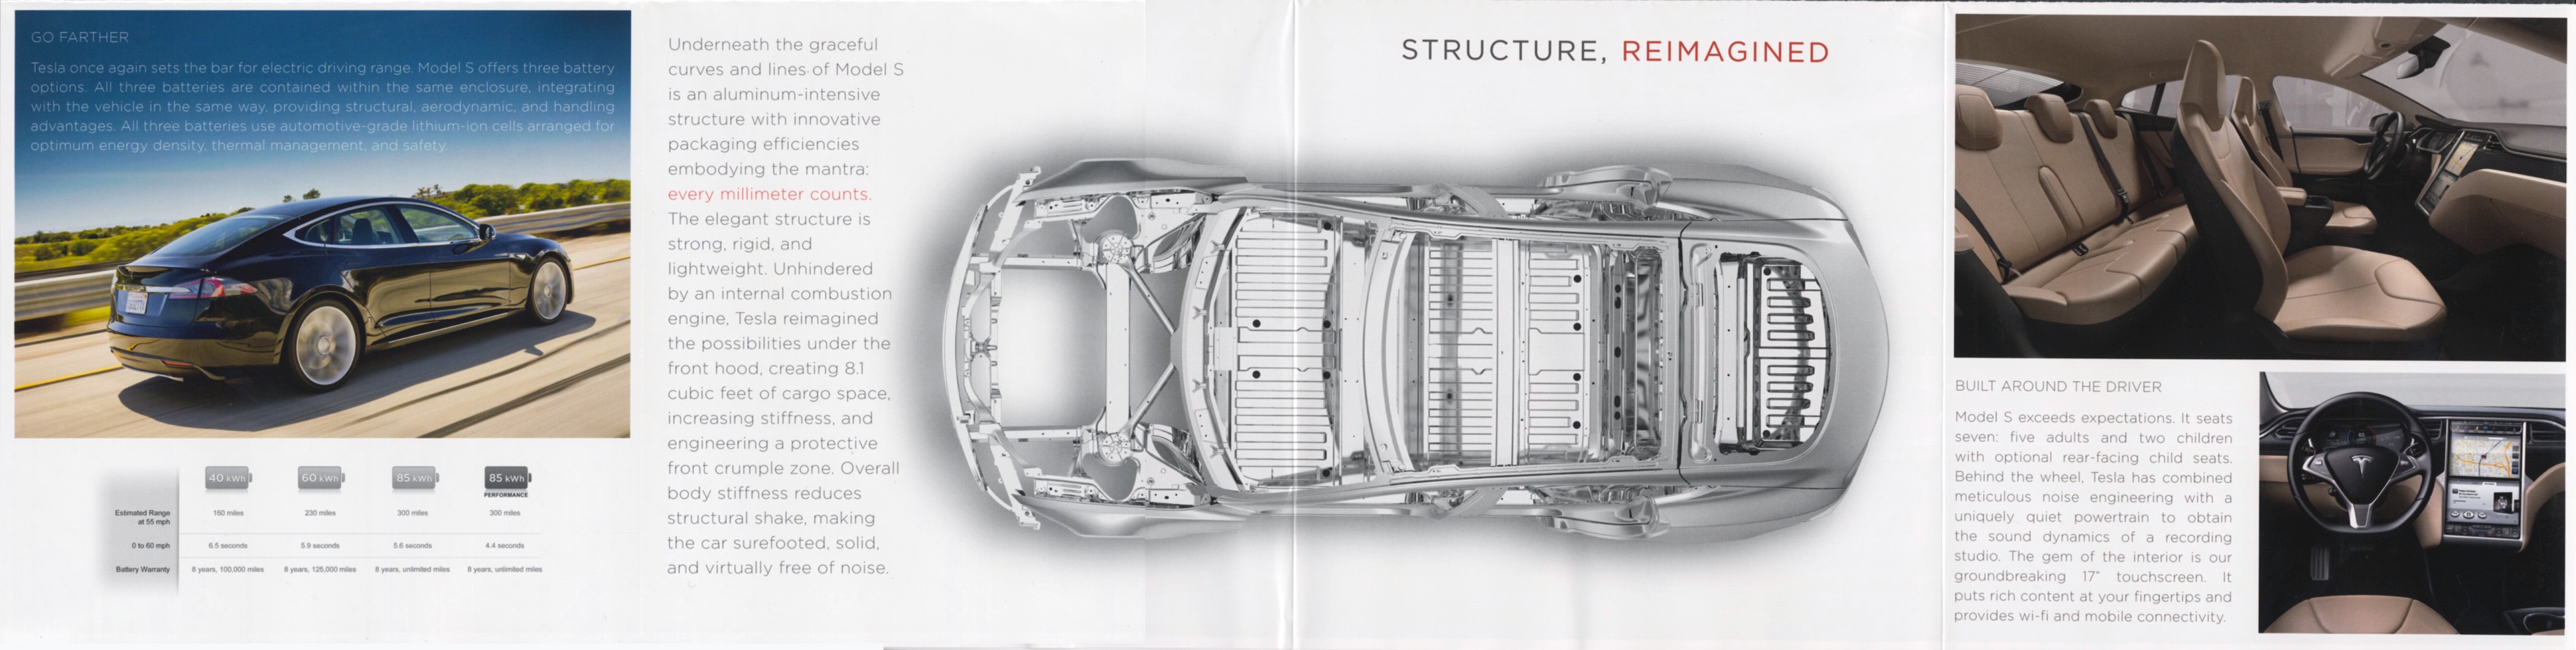 2012 Tesla Model S Brochure Page 1